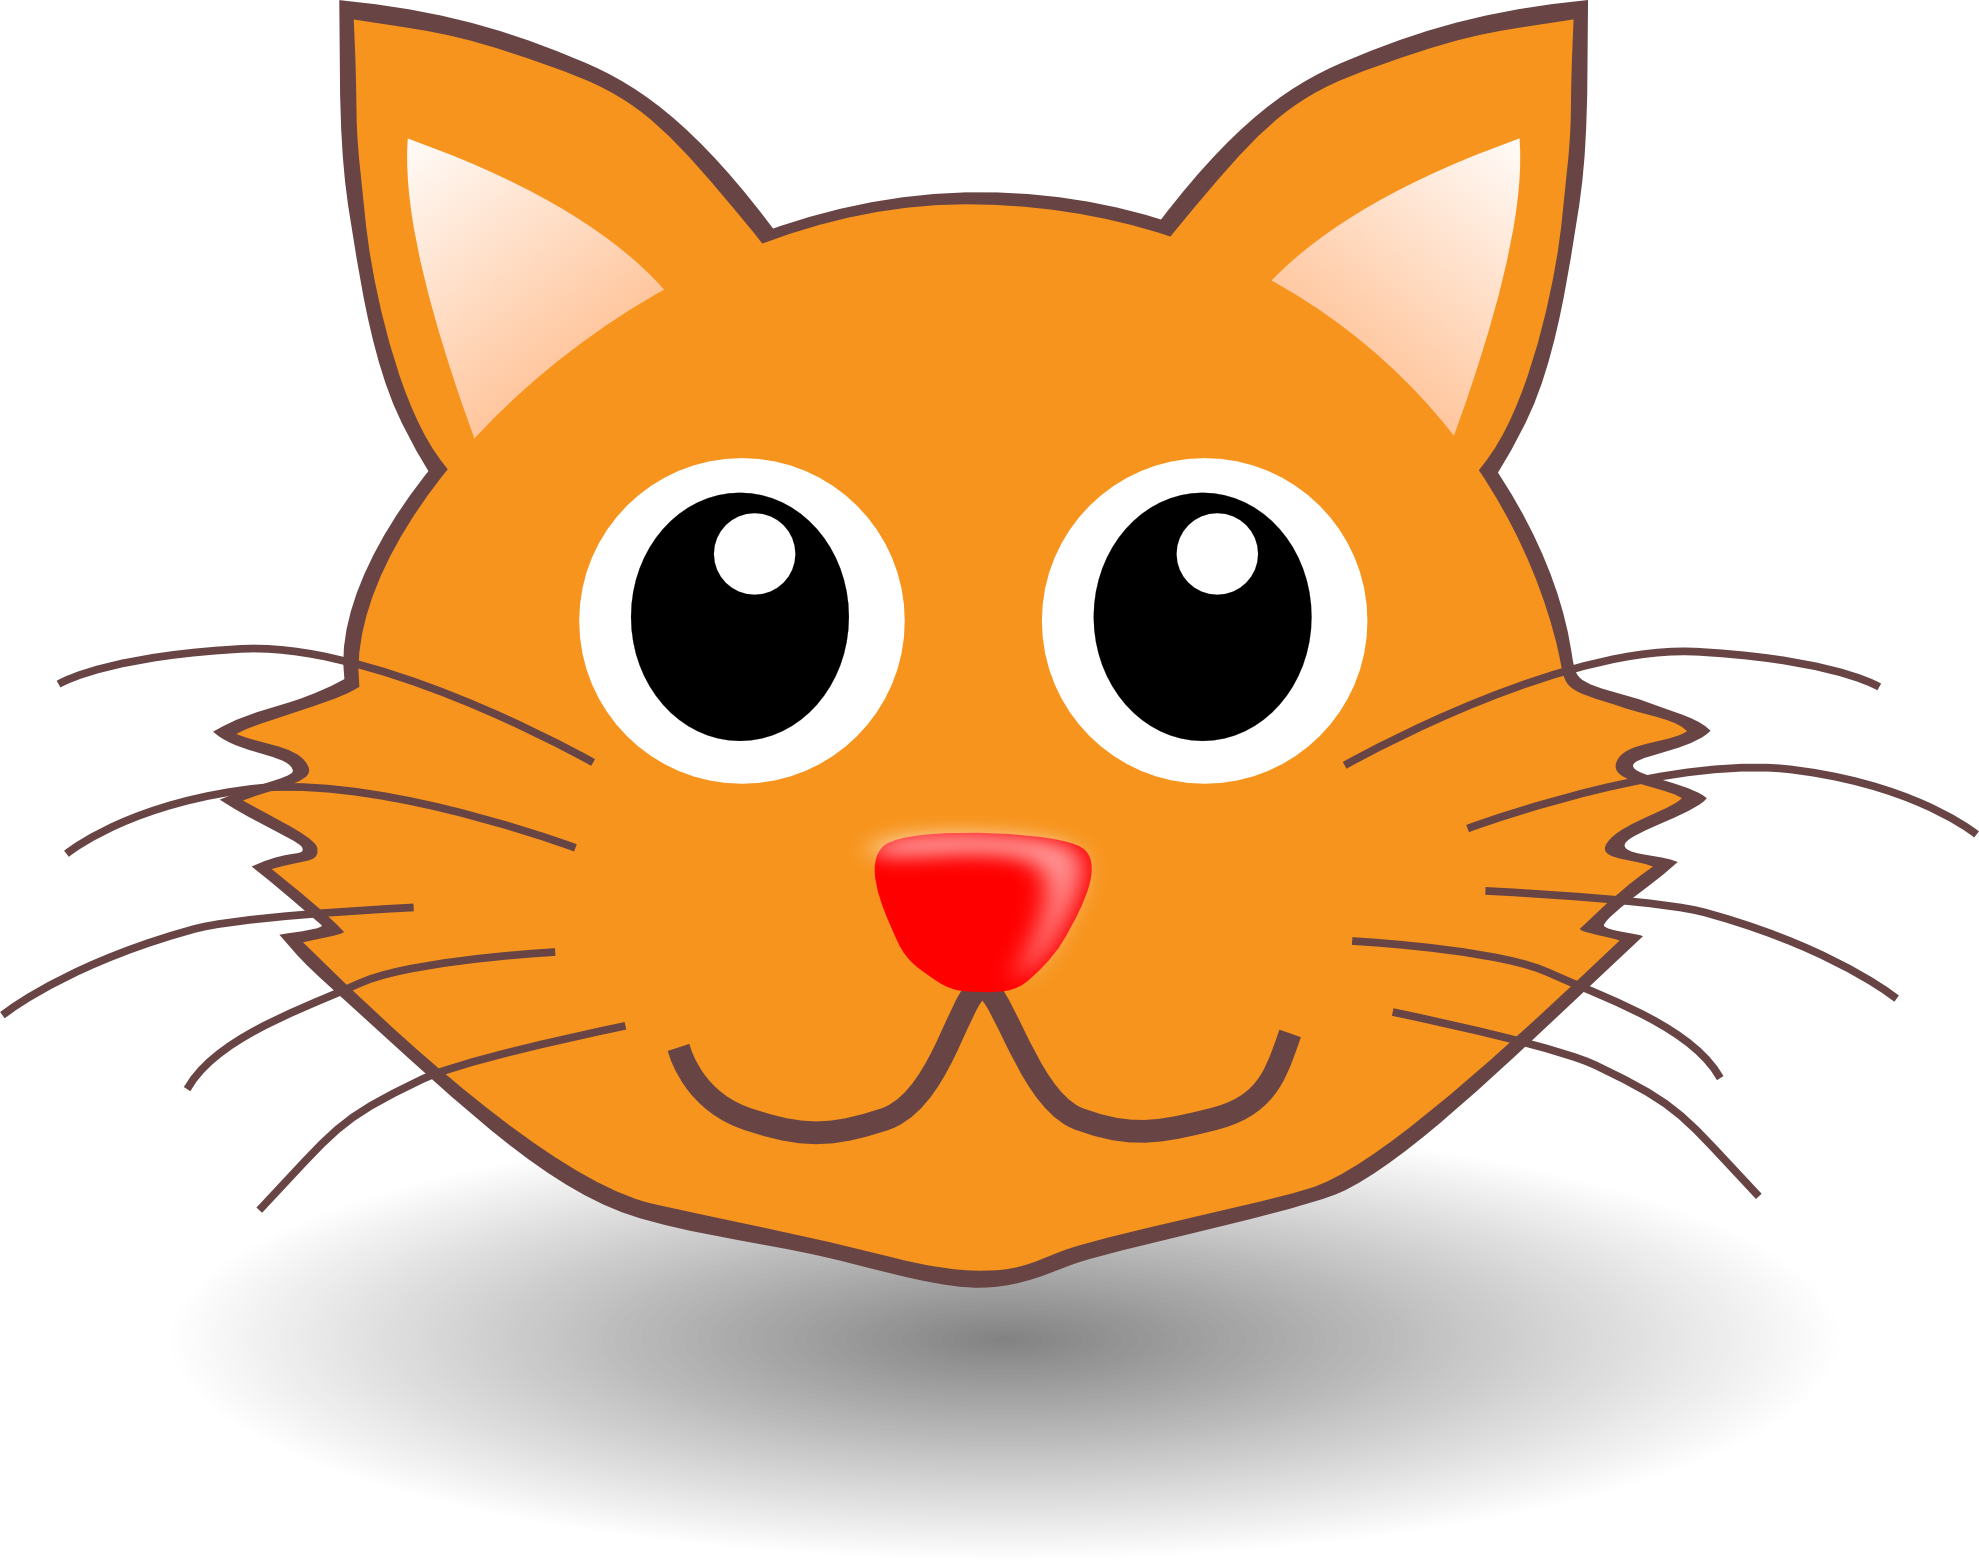 Free Cartoon Of Cat, Download Free Cartoon Of Cat png